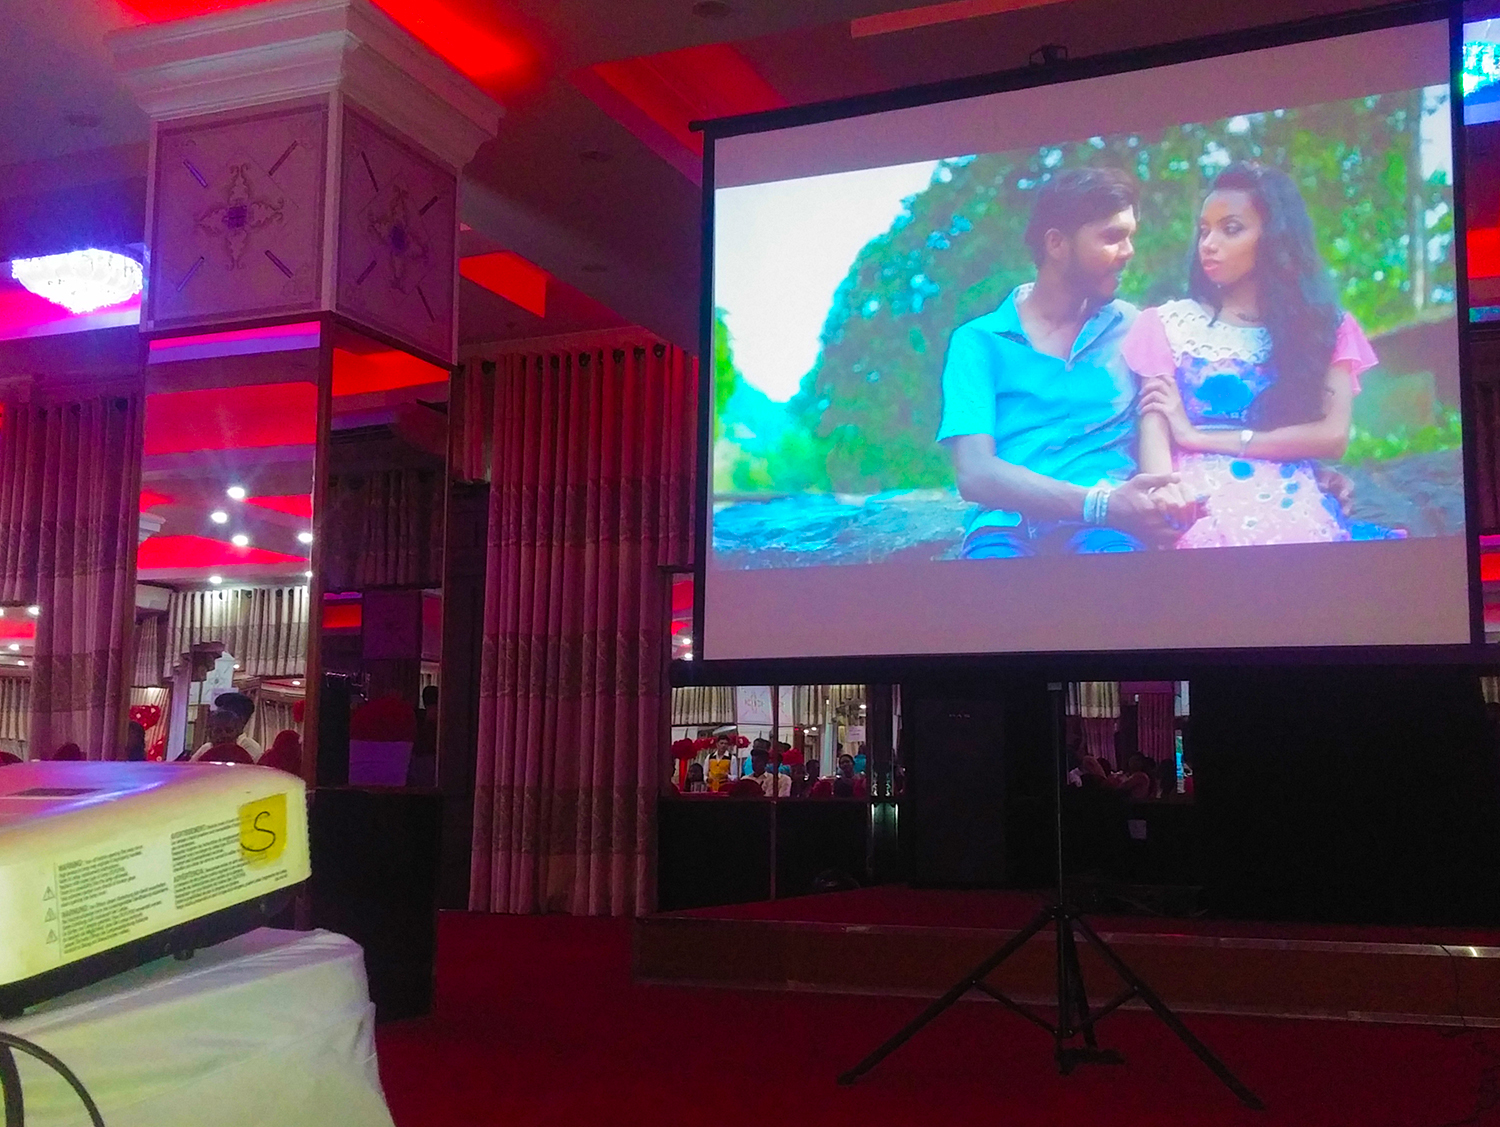 Epson EB-X05 Projector 3300 Lumens display at Sri Lankan wedding venue